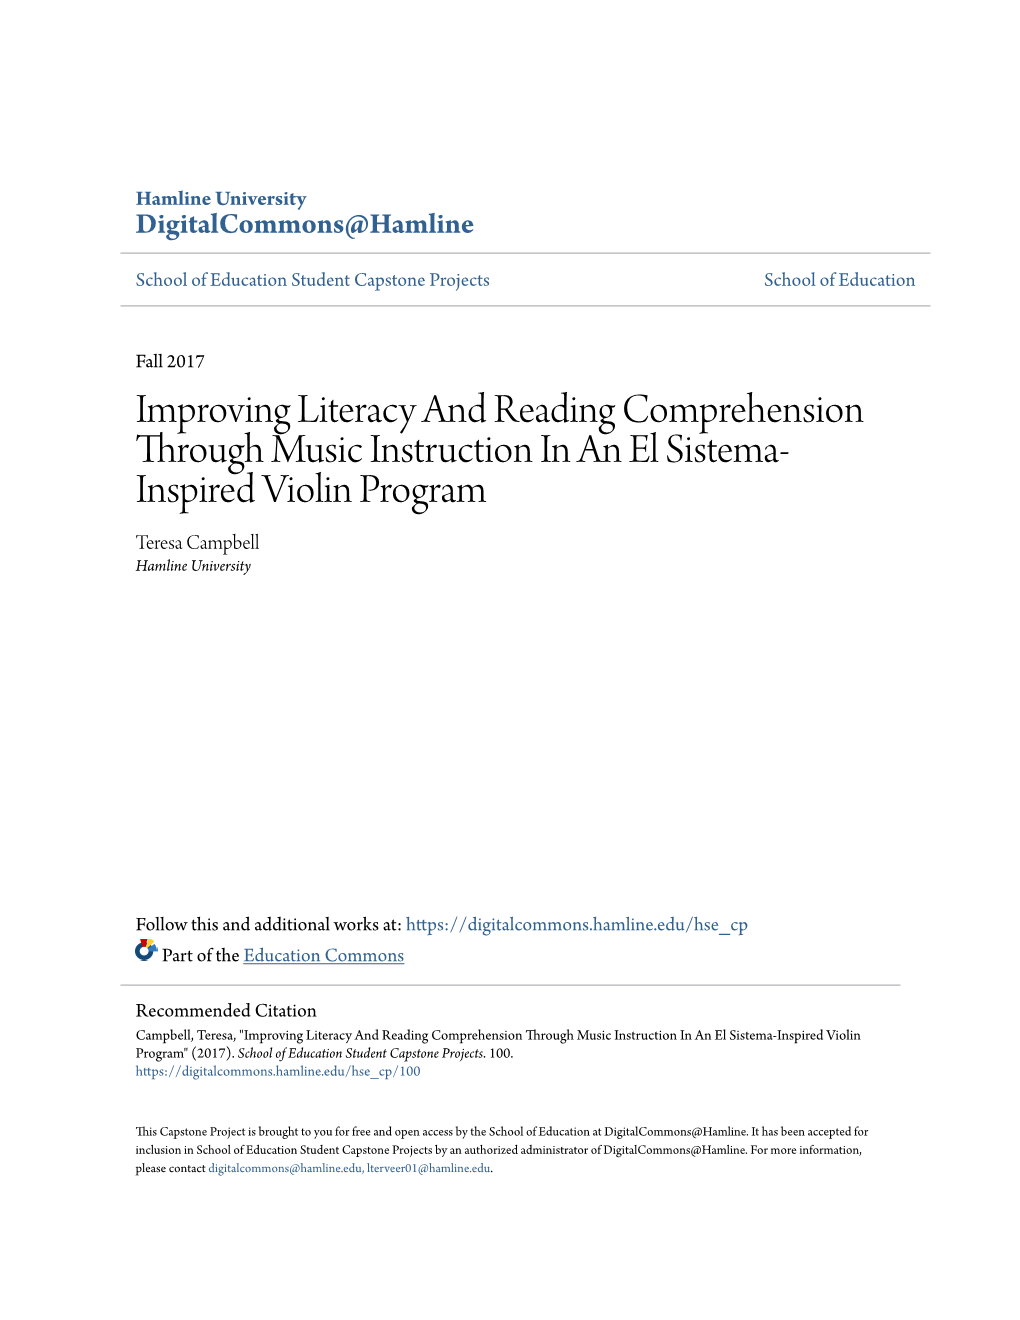 Improving Literacy and Reading Comprehension Through Music Instruction in an El Sistema- Inspired Violin Program Teresa Campbell Hamline University